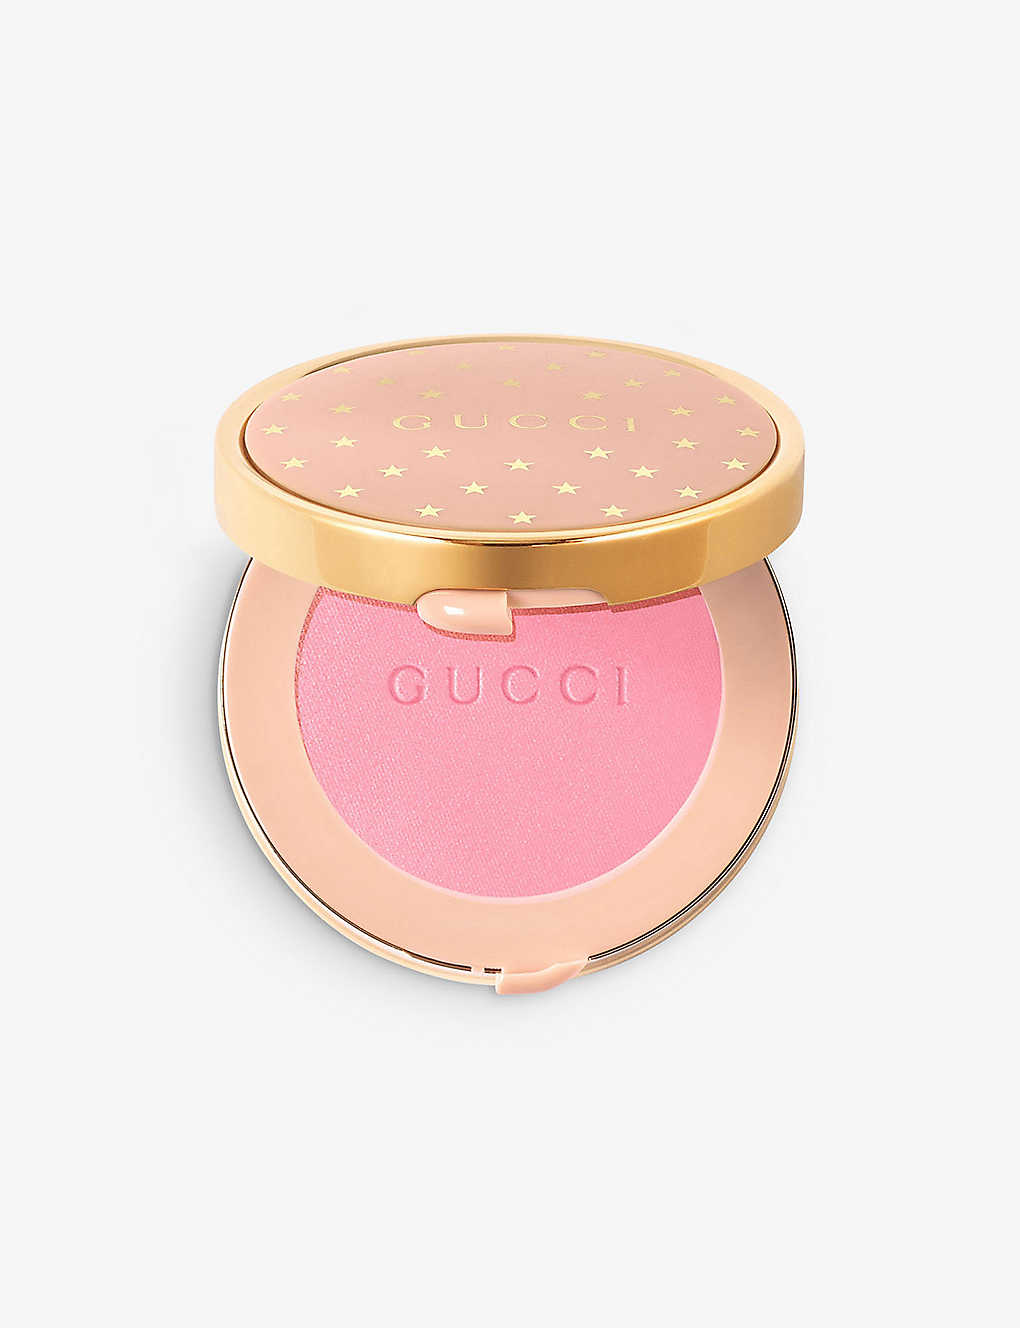 Gucci True Pink Blush De Beauté Cheeks And Eyes Powder 5.5g